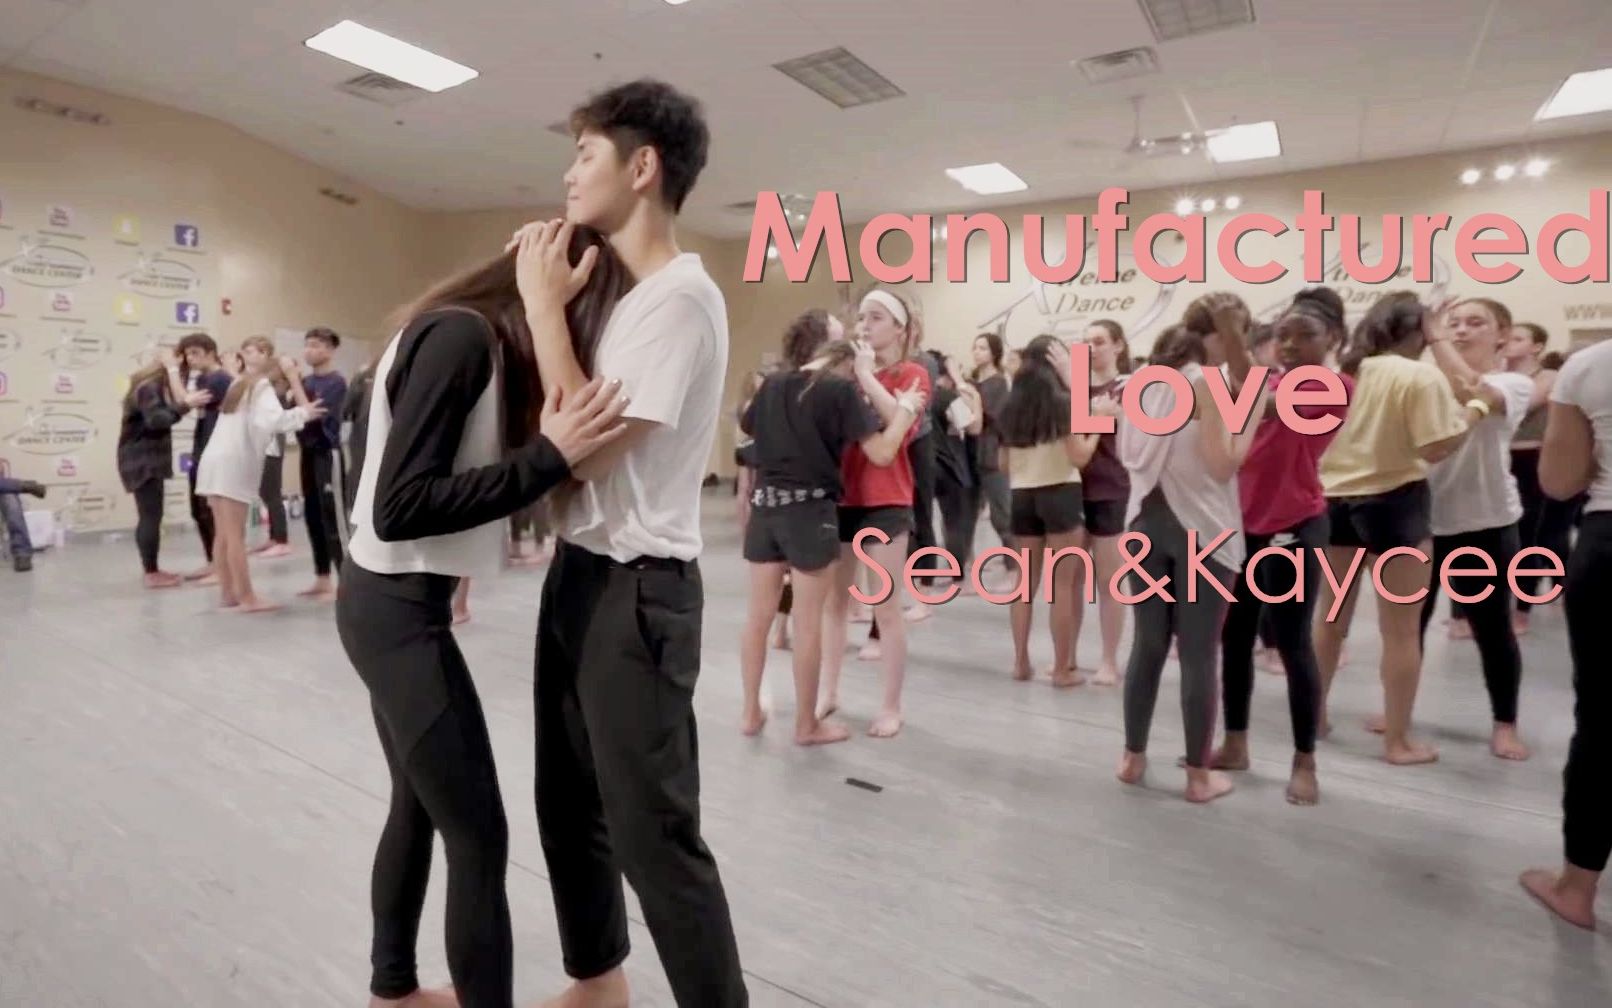 【Sean&Kaycee】超甜又虐心的双人舞Manufactured Love！